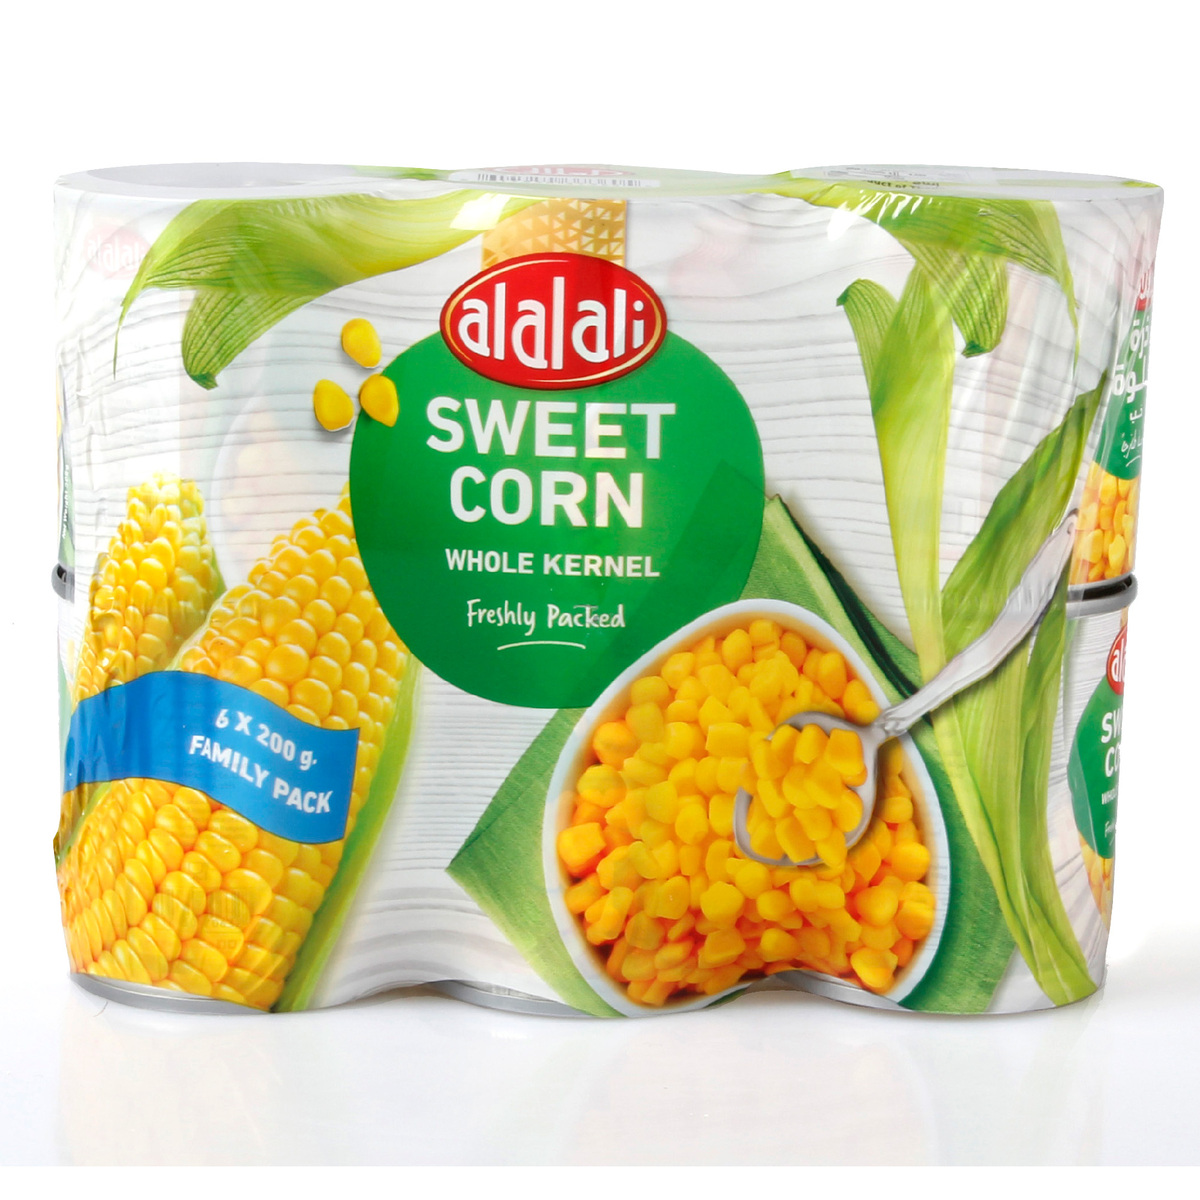 Al Alali Whole Kernel Sweet Corn Value Pack 6 x 200g